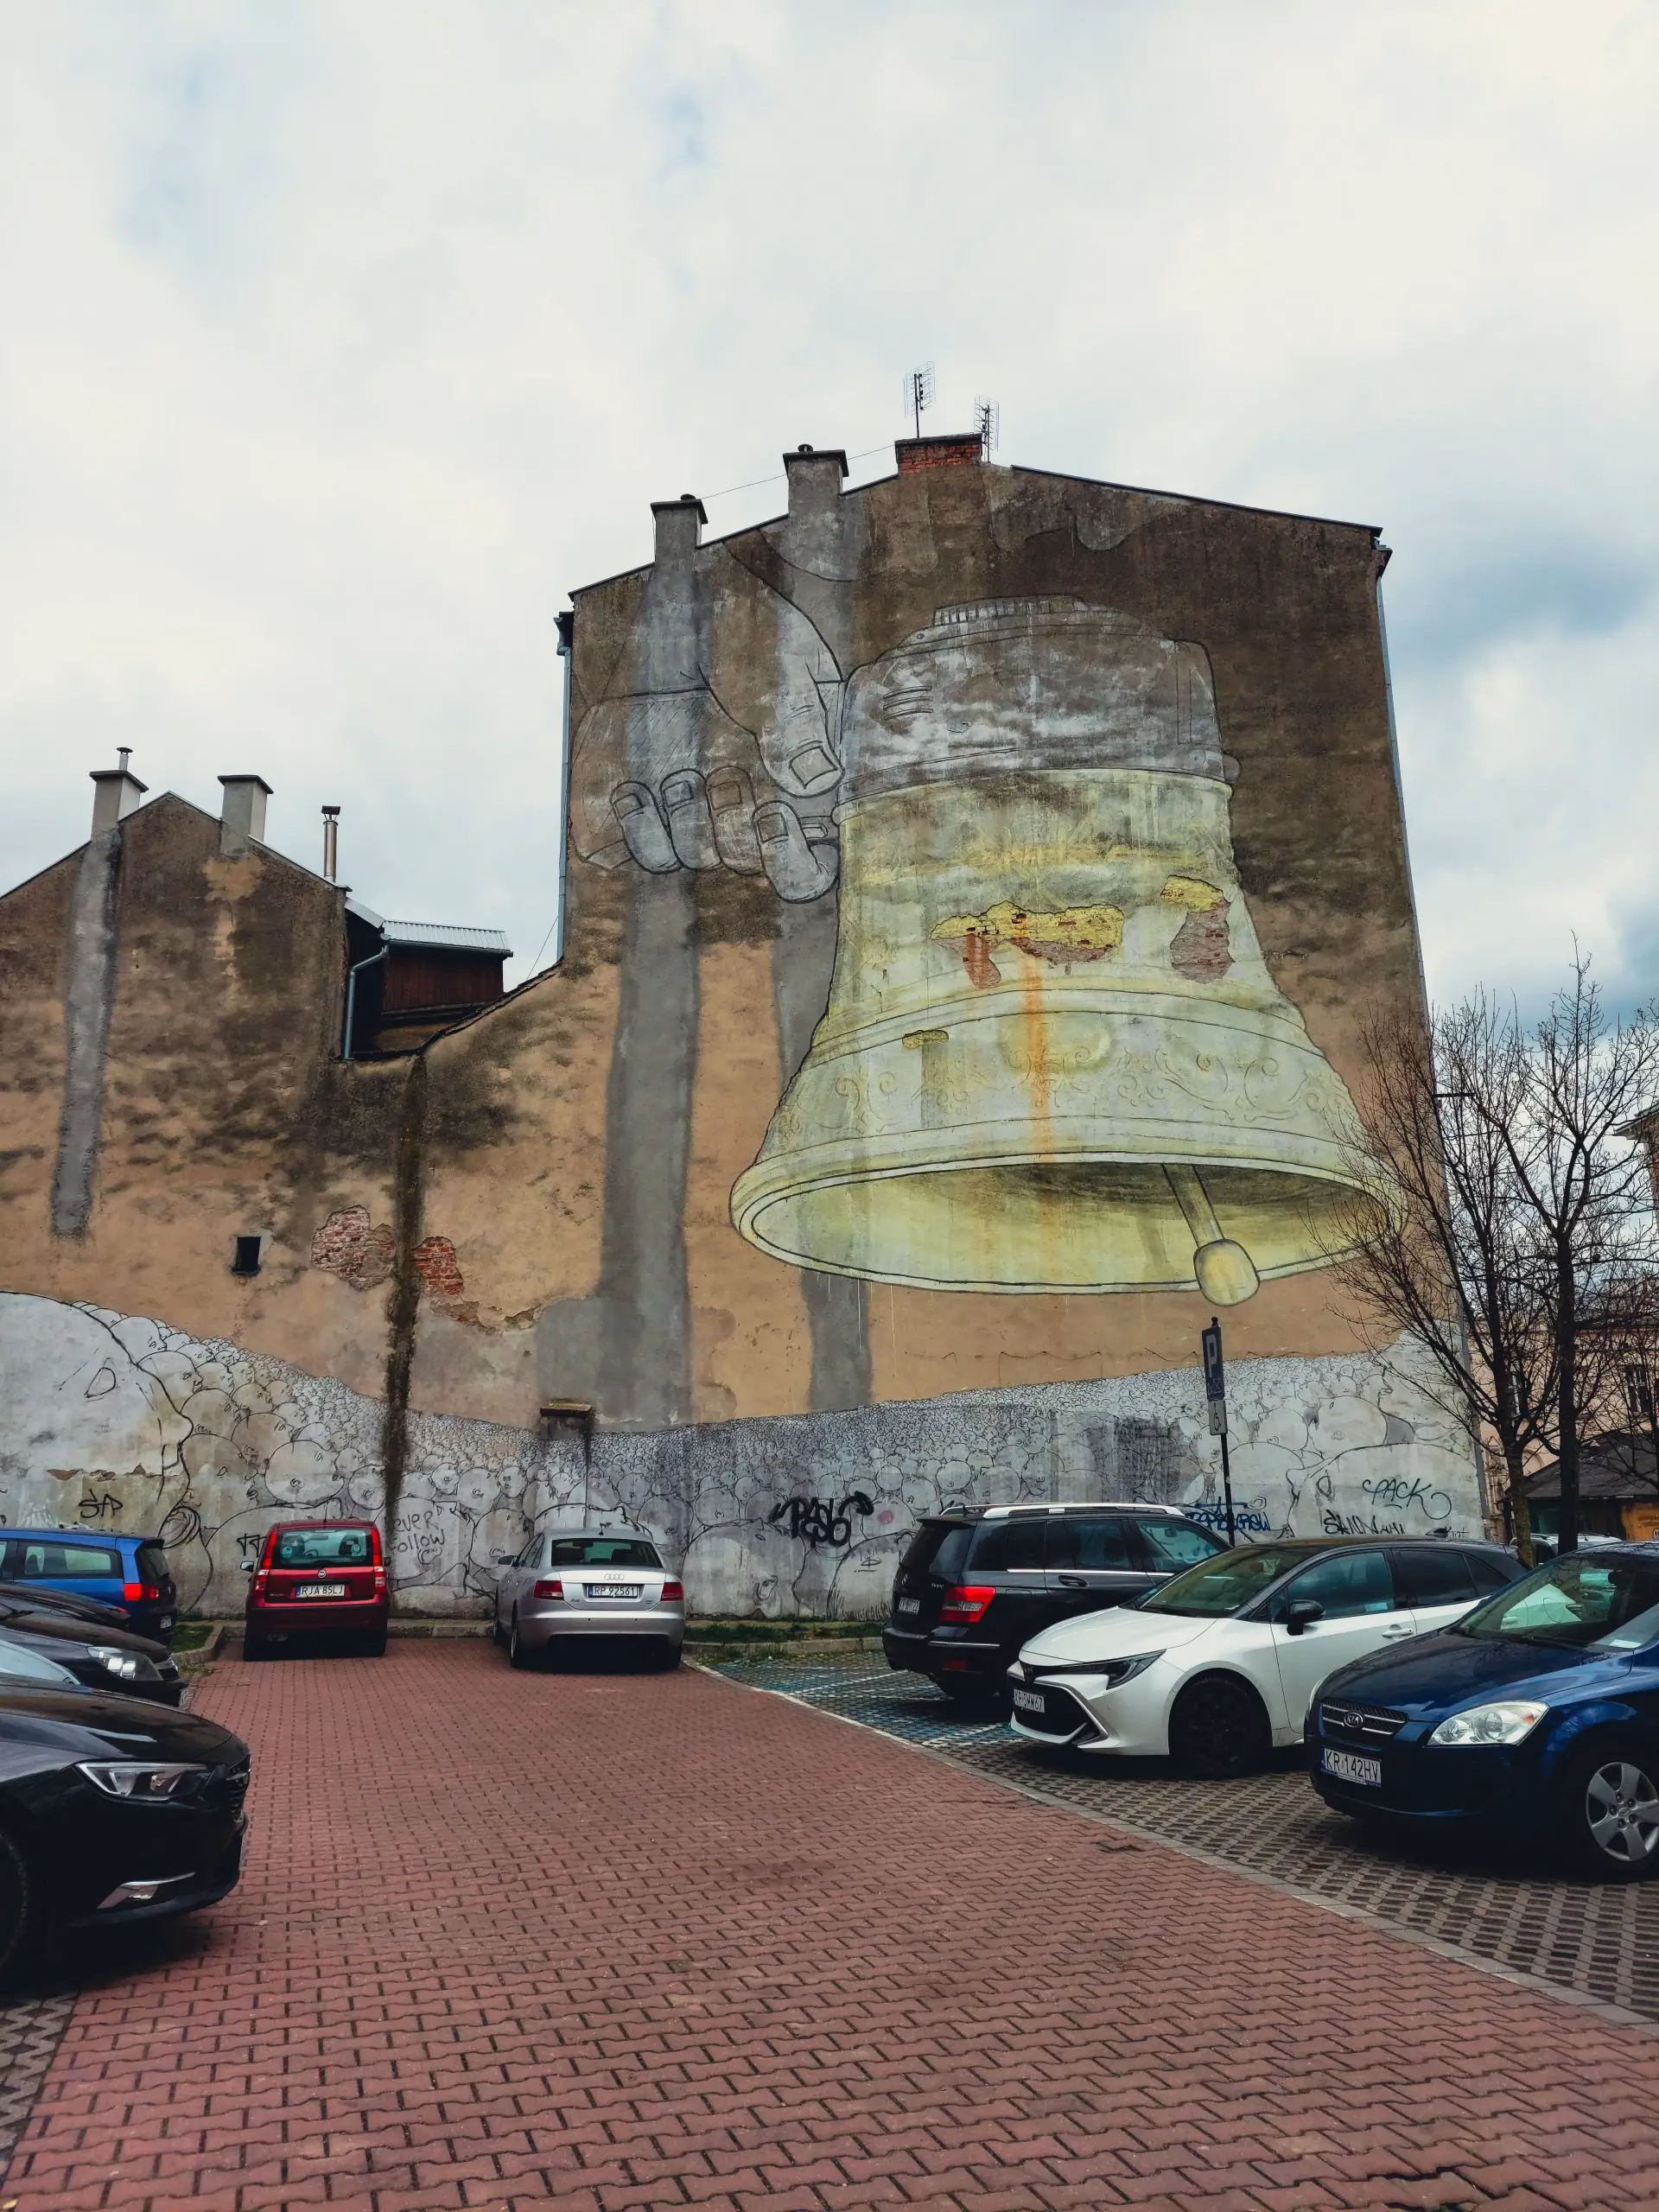 mural by blu in krakow poland